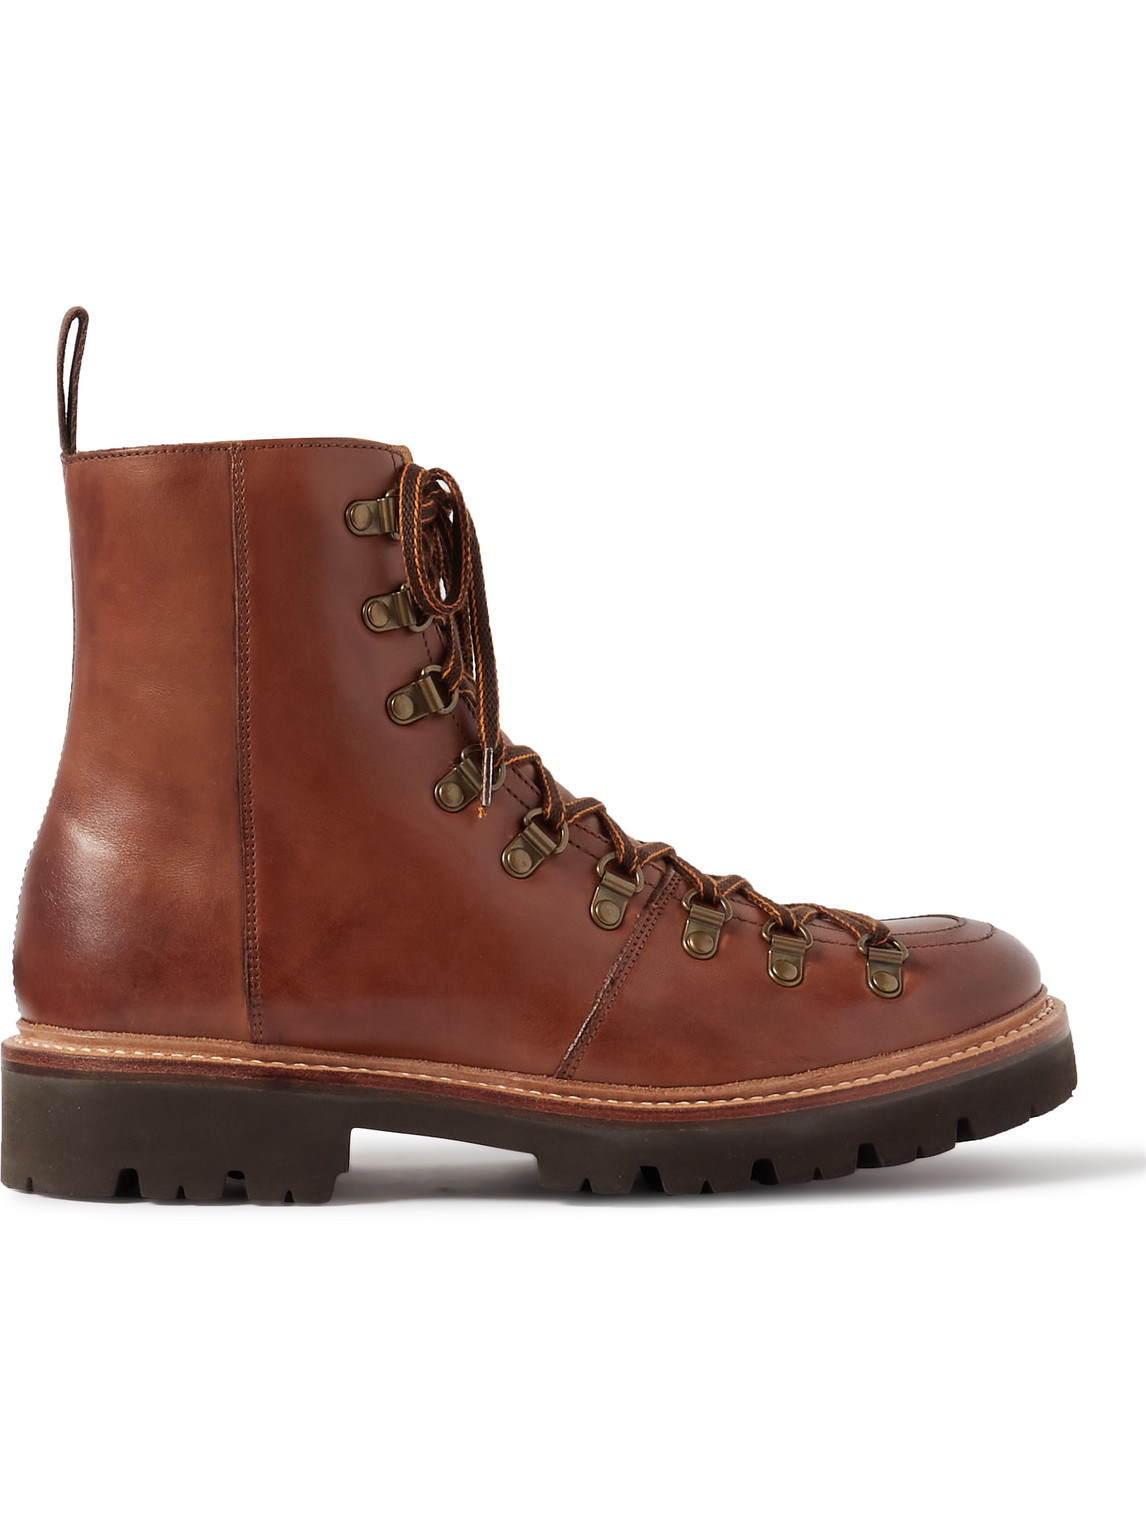 Brady Polished-Leather Boots